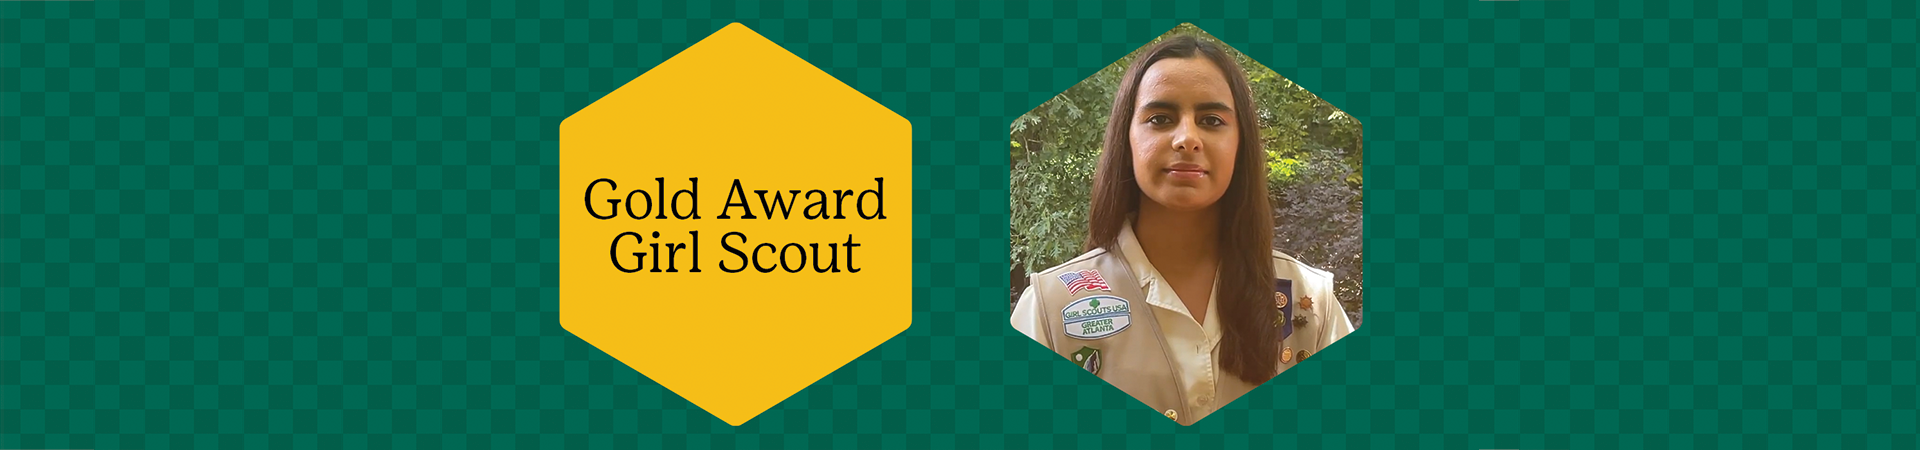  Gold Award Girl Scout Himani 